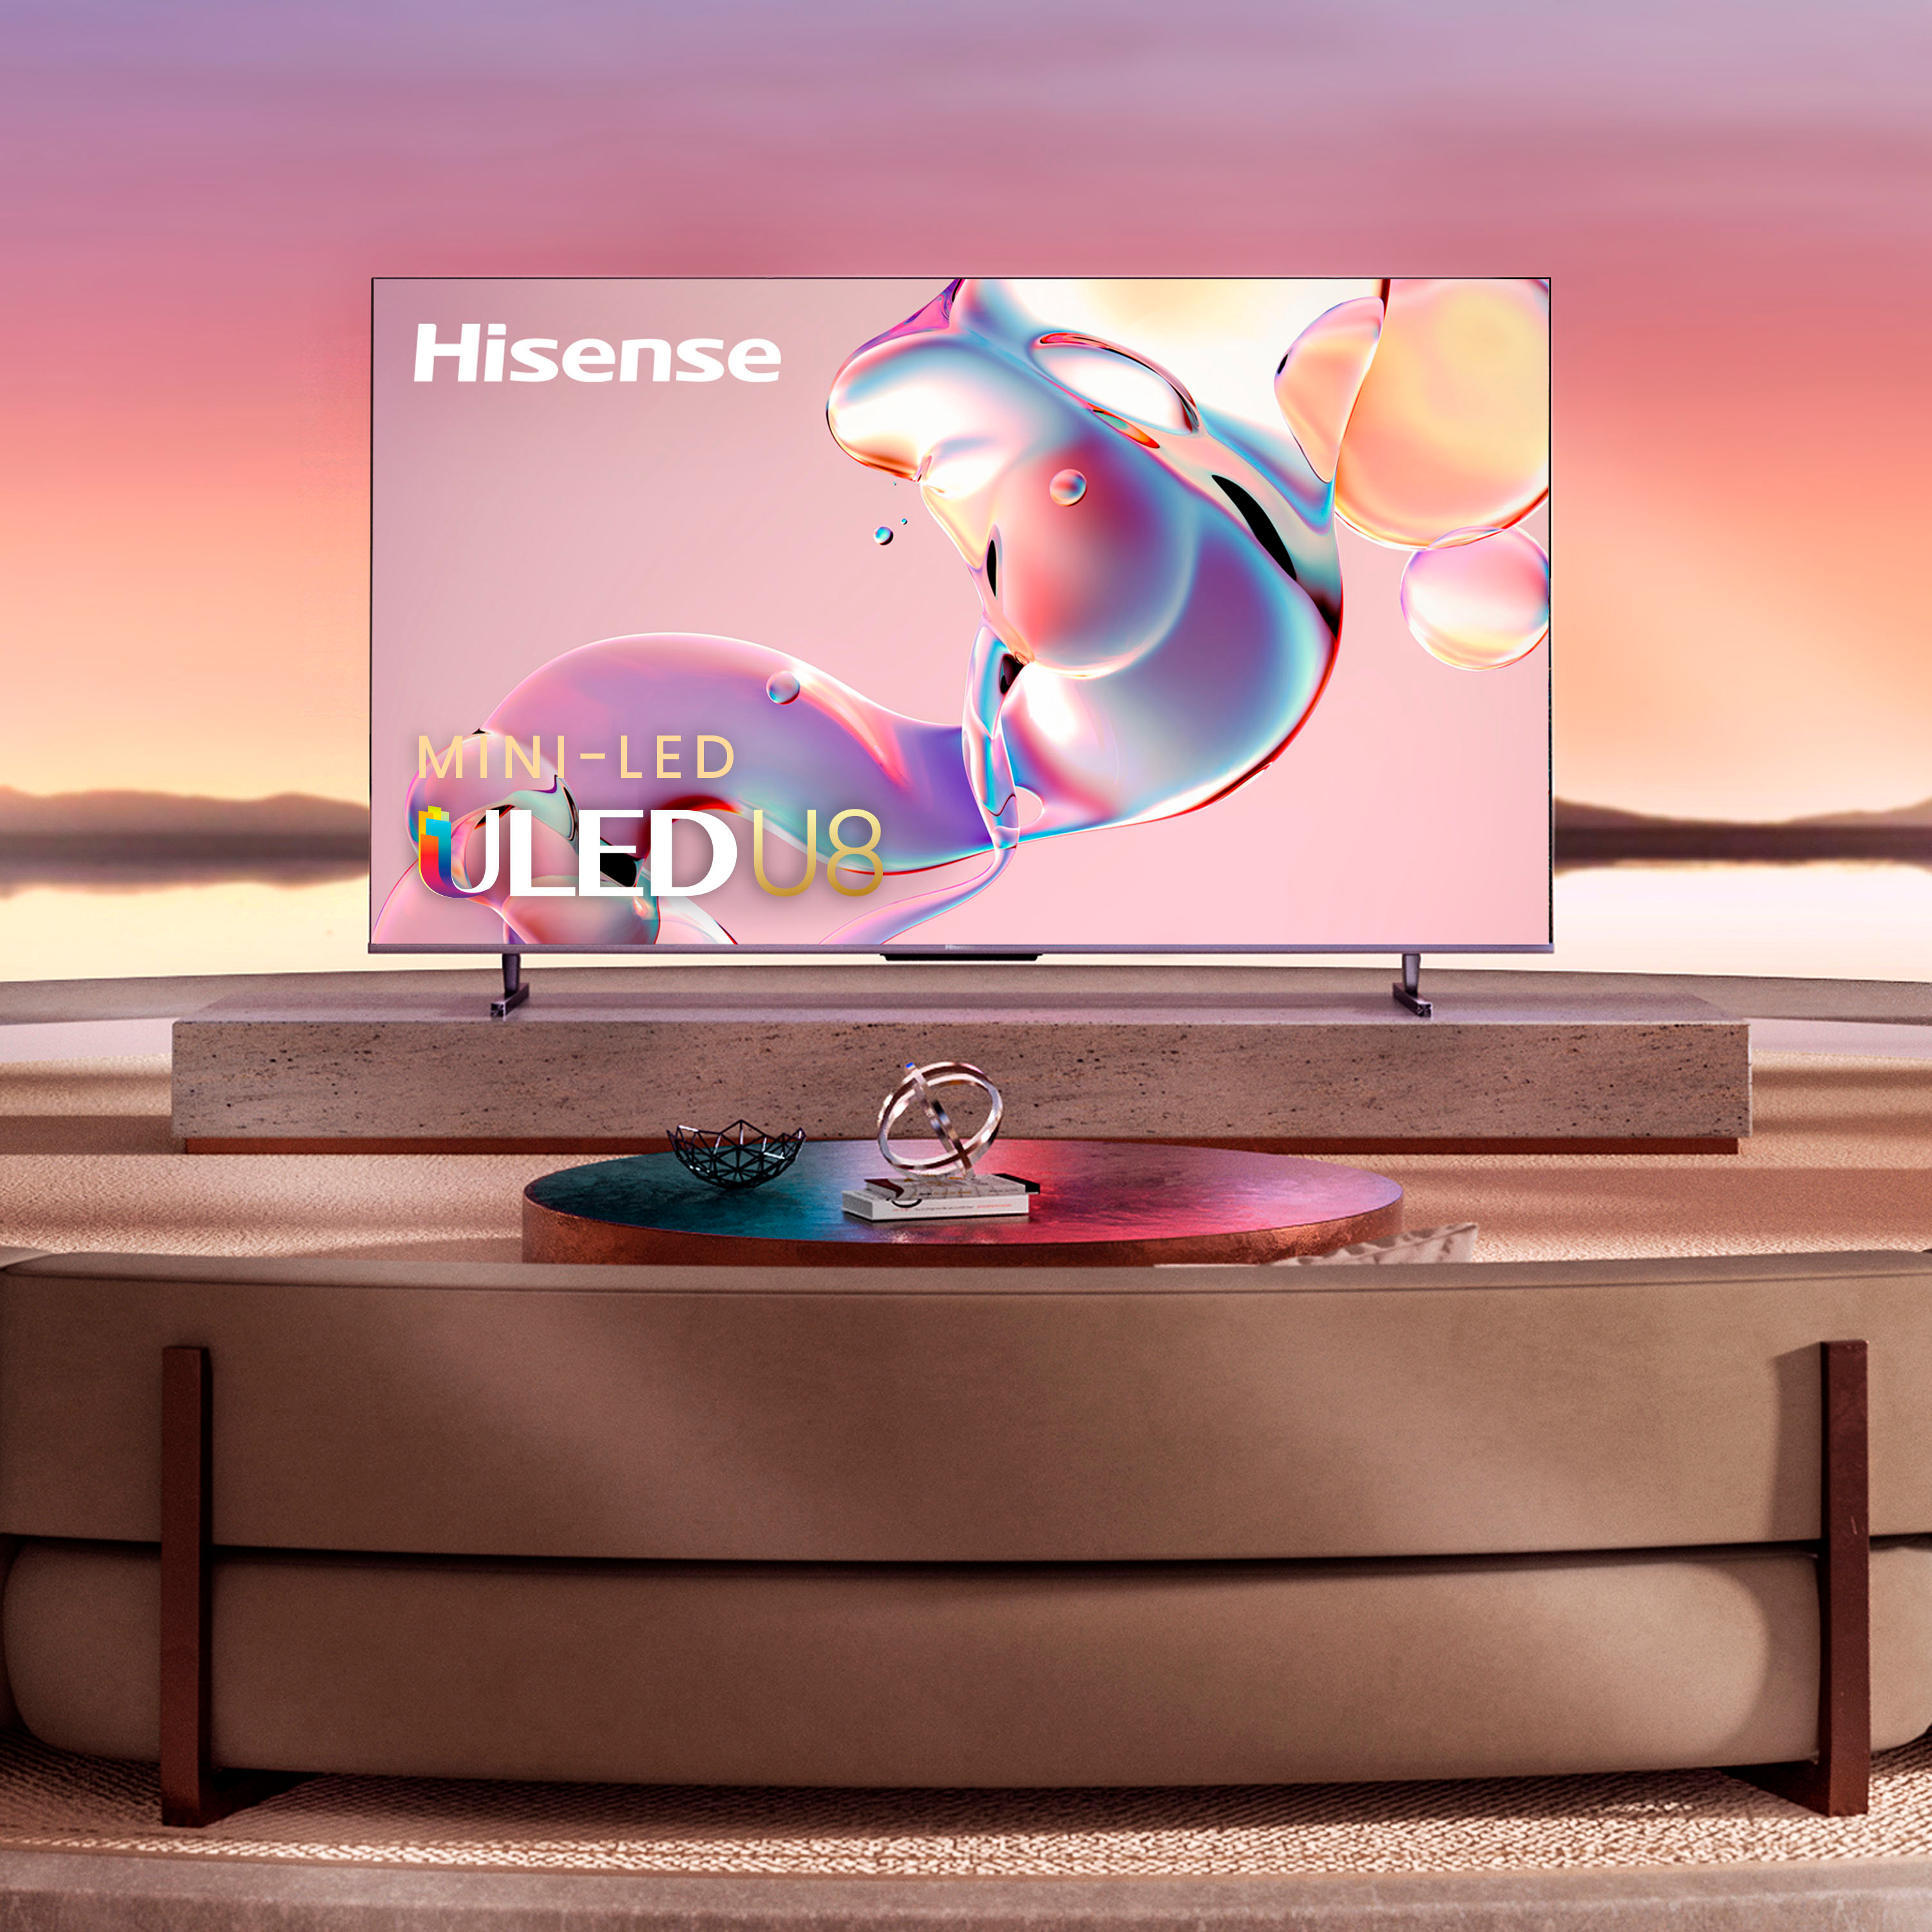 Hisense's U8K 4K mini-LED TV is already deeply discounted